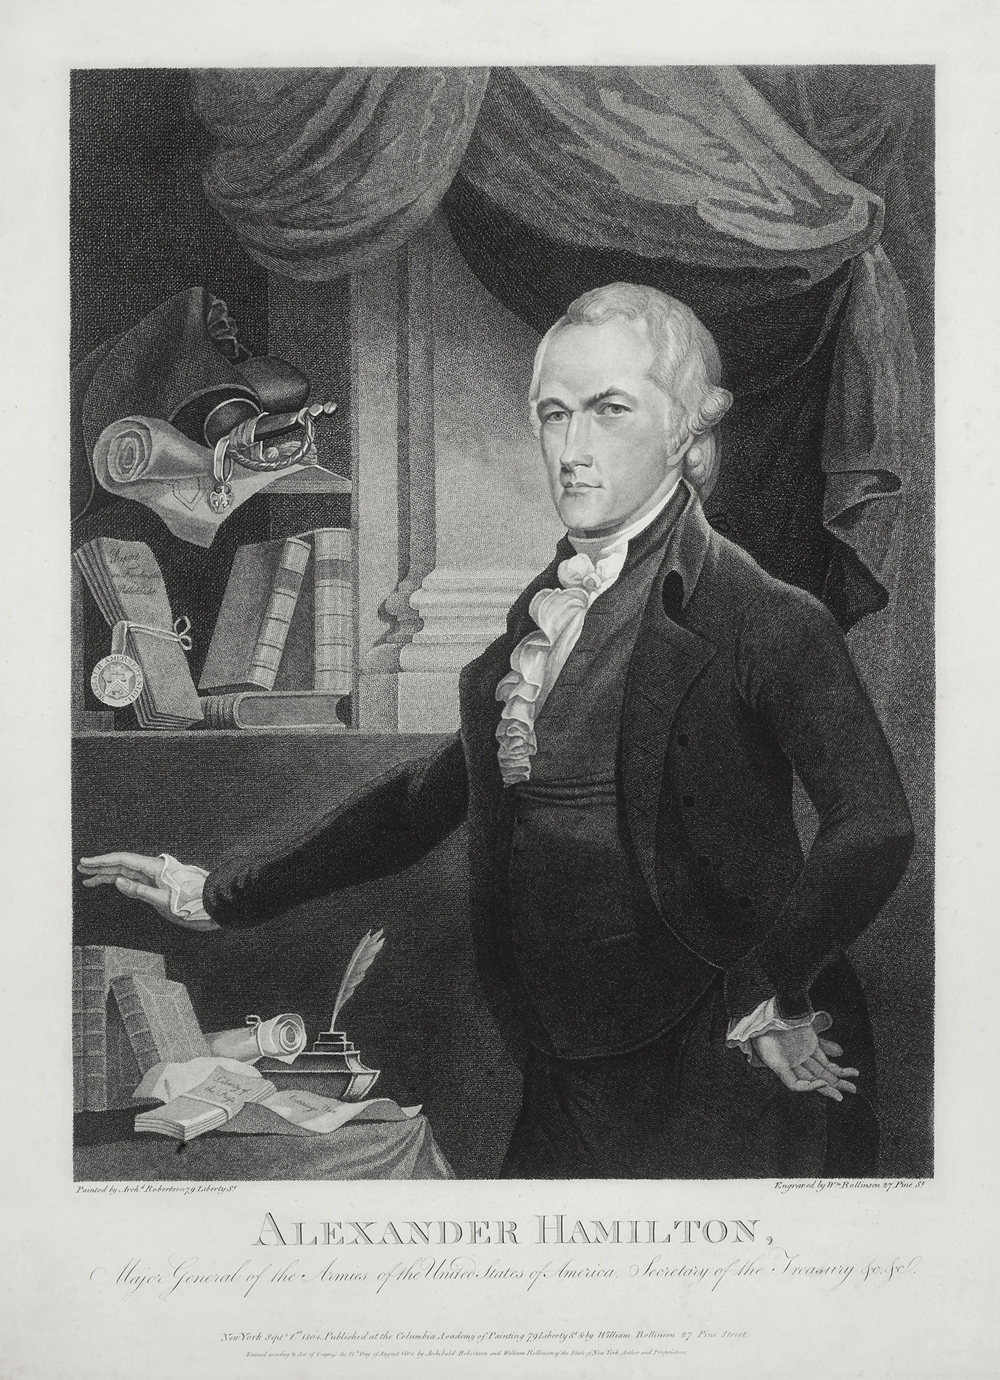 Alexander Hamilton engraving by William Rollinson after Archibald Robertson, 1804